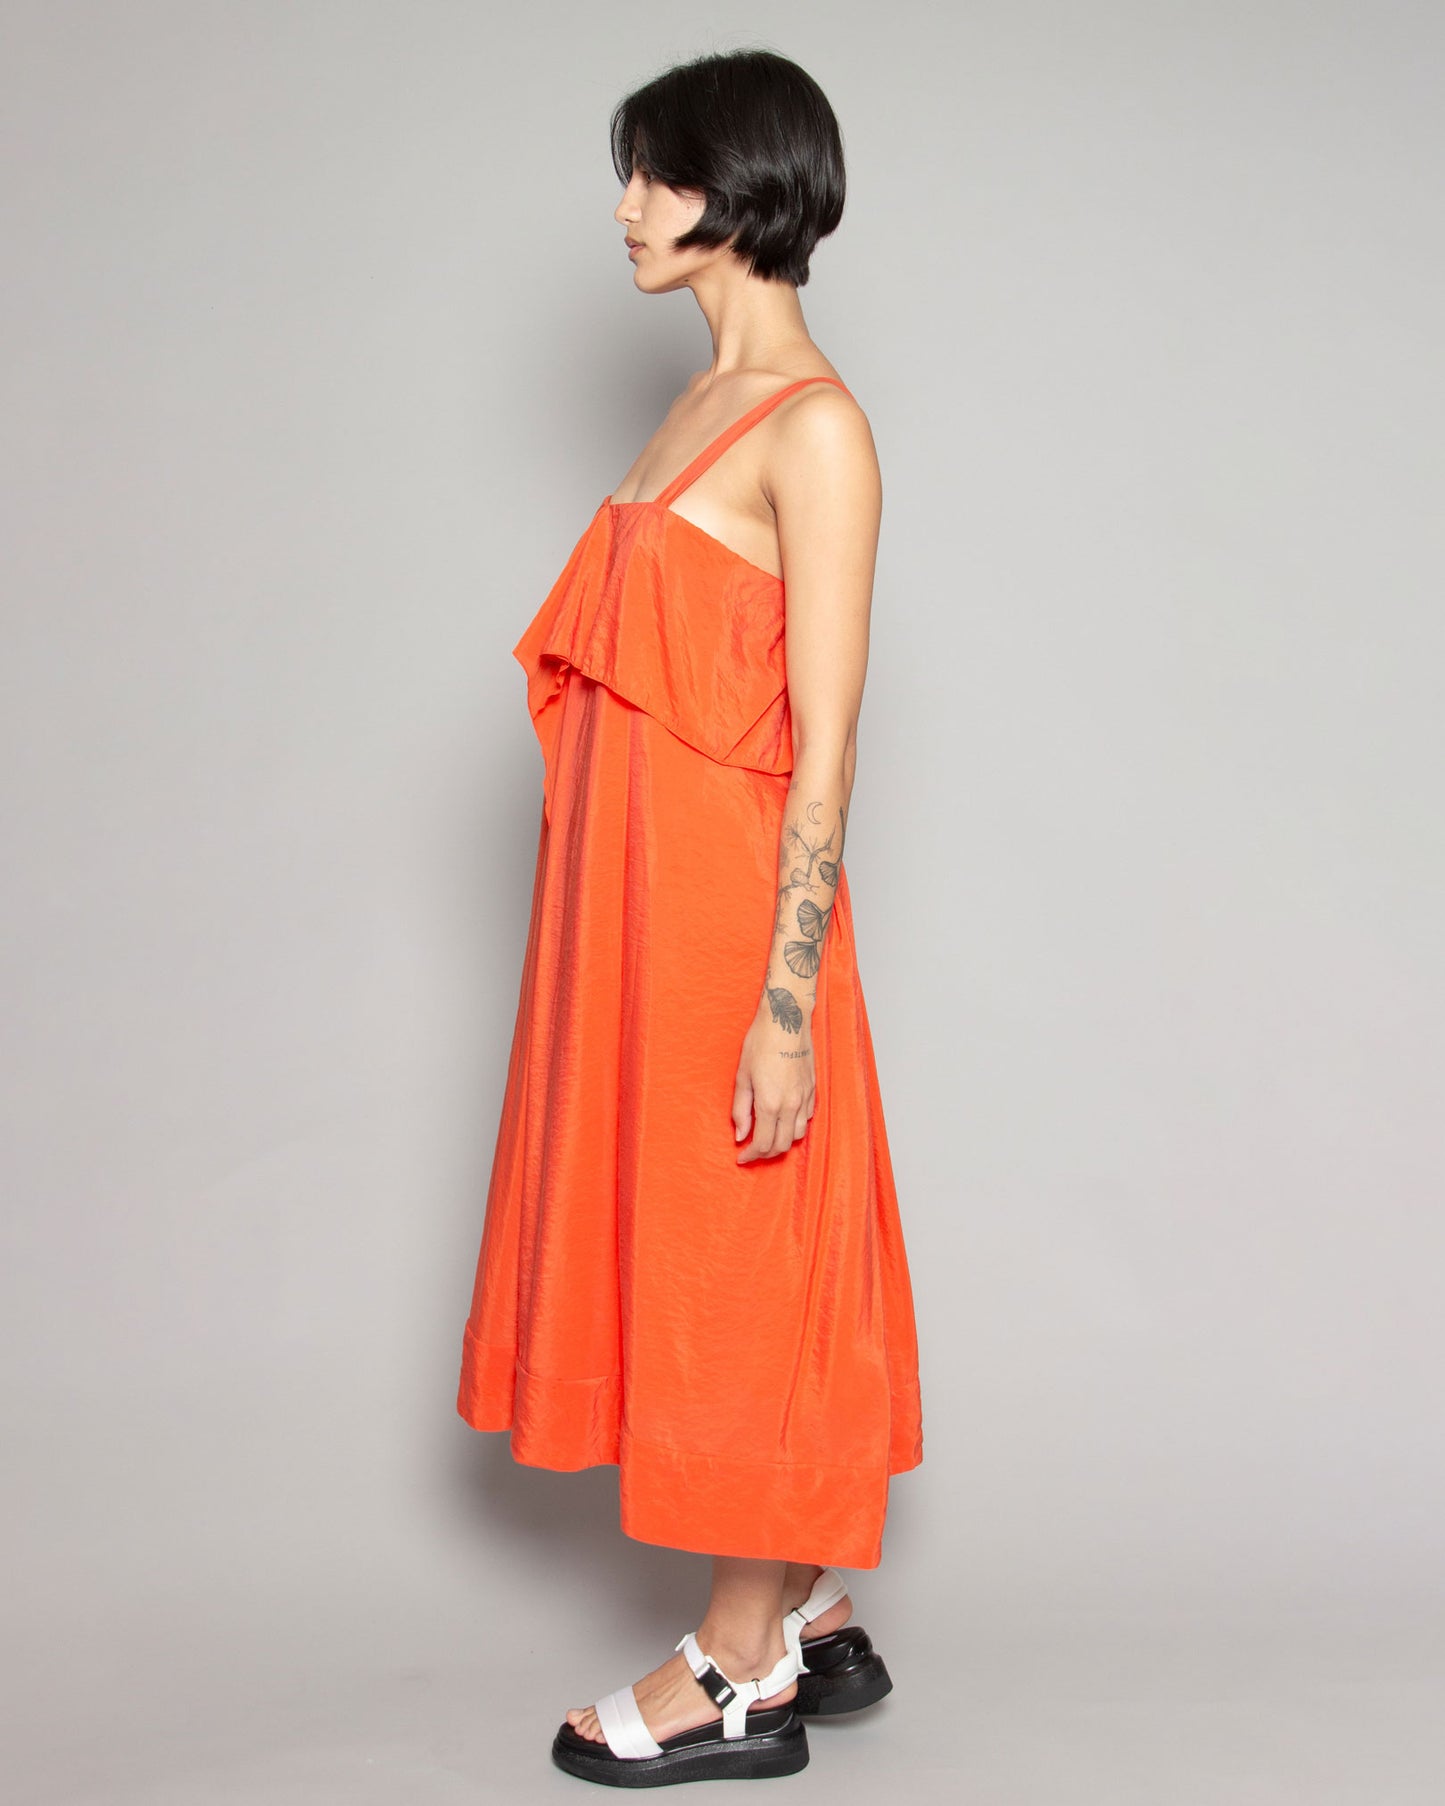 RACHEL COMEY Dovalina Dress in Poppy available at Lahn.shop